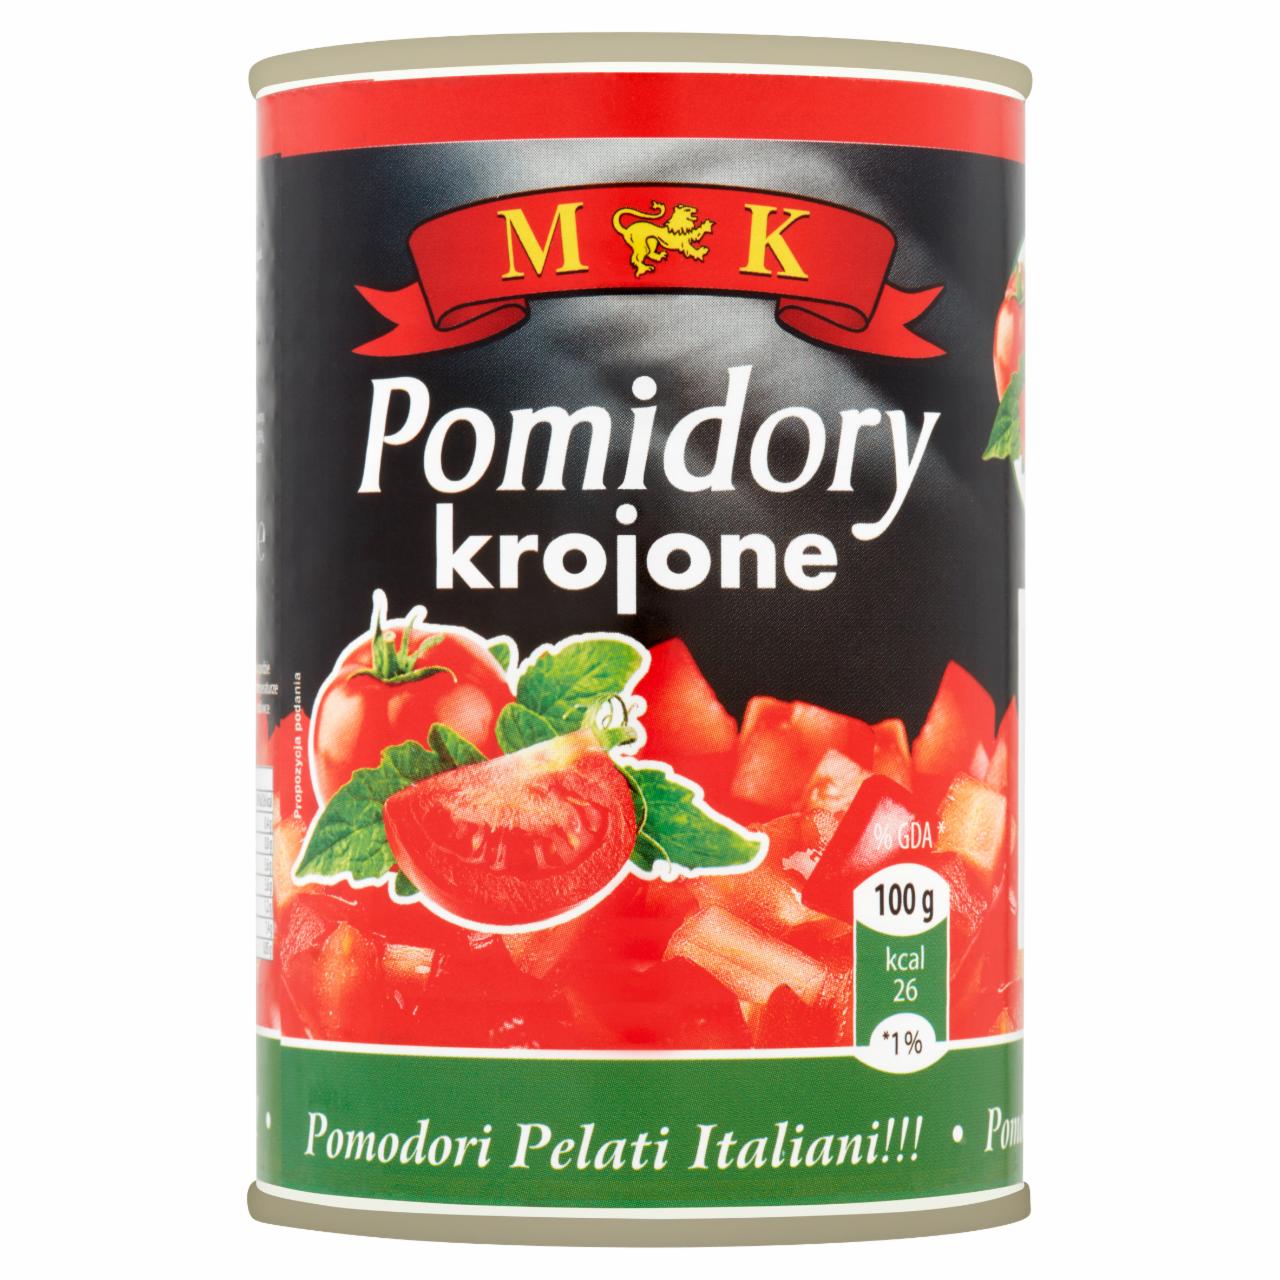 Фото - Pomidory krojone MK